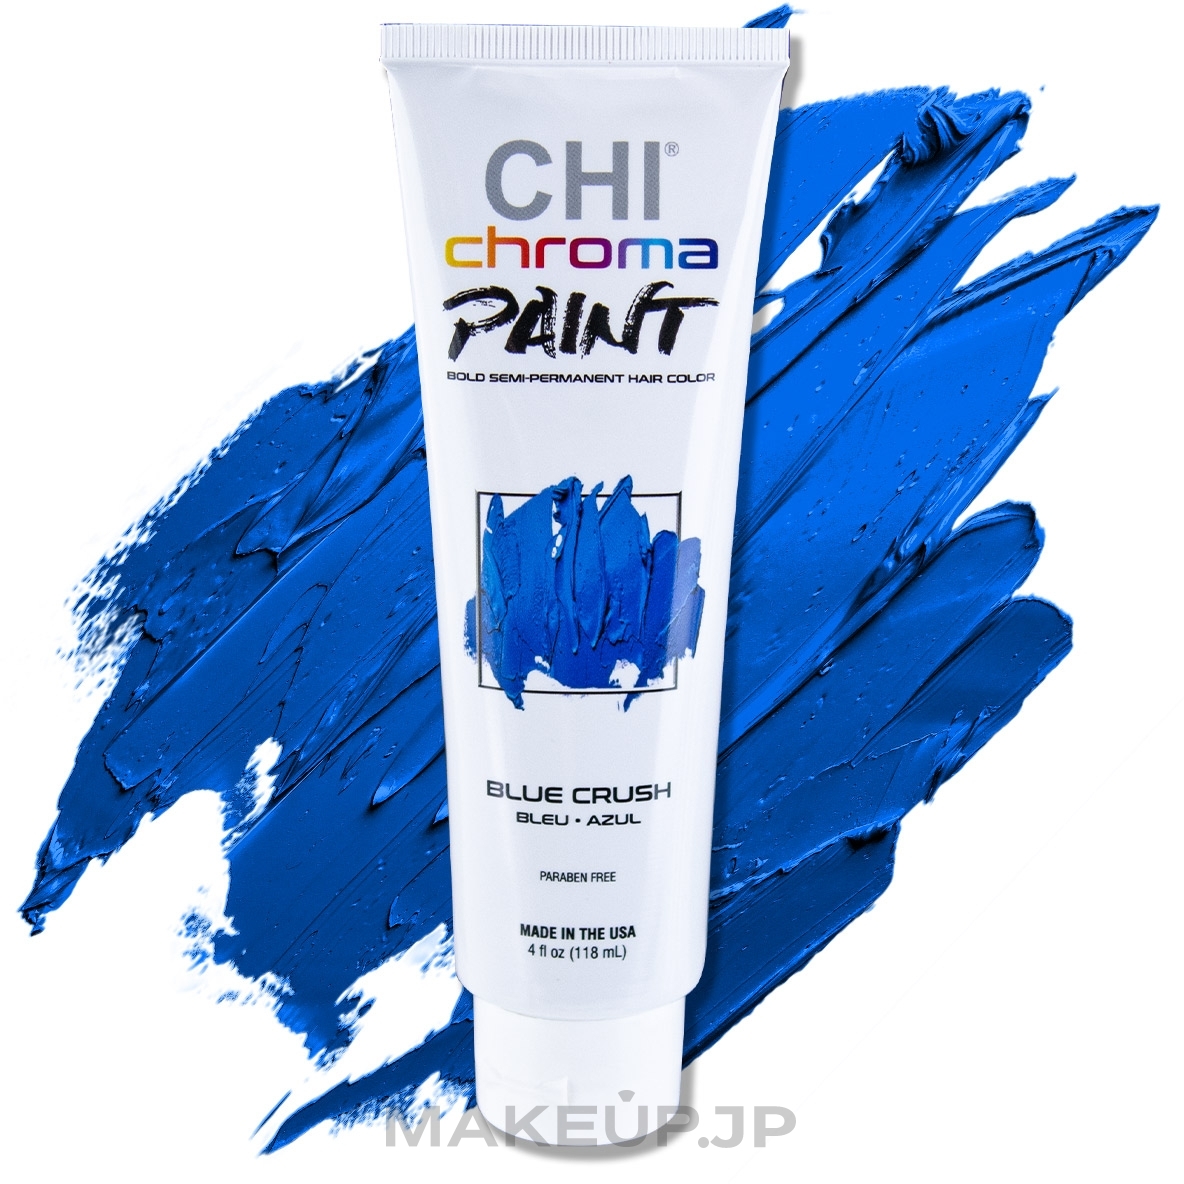 Semi-Permanent Hair Color - CHI Chroma Paint Bold Semi-Permanent Hair Color — photo Blue Crush